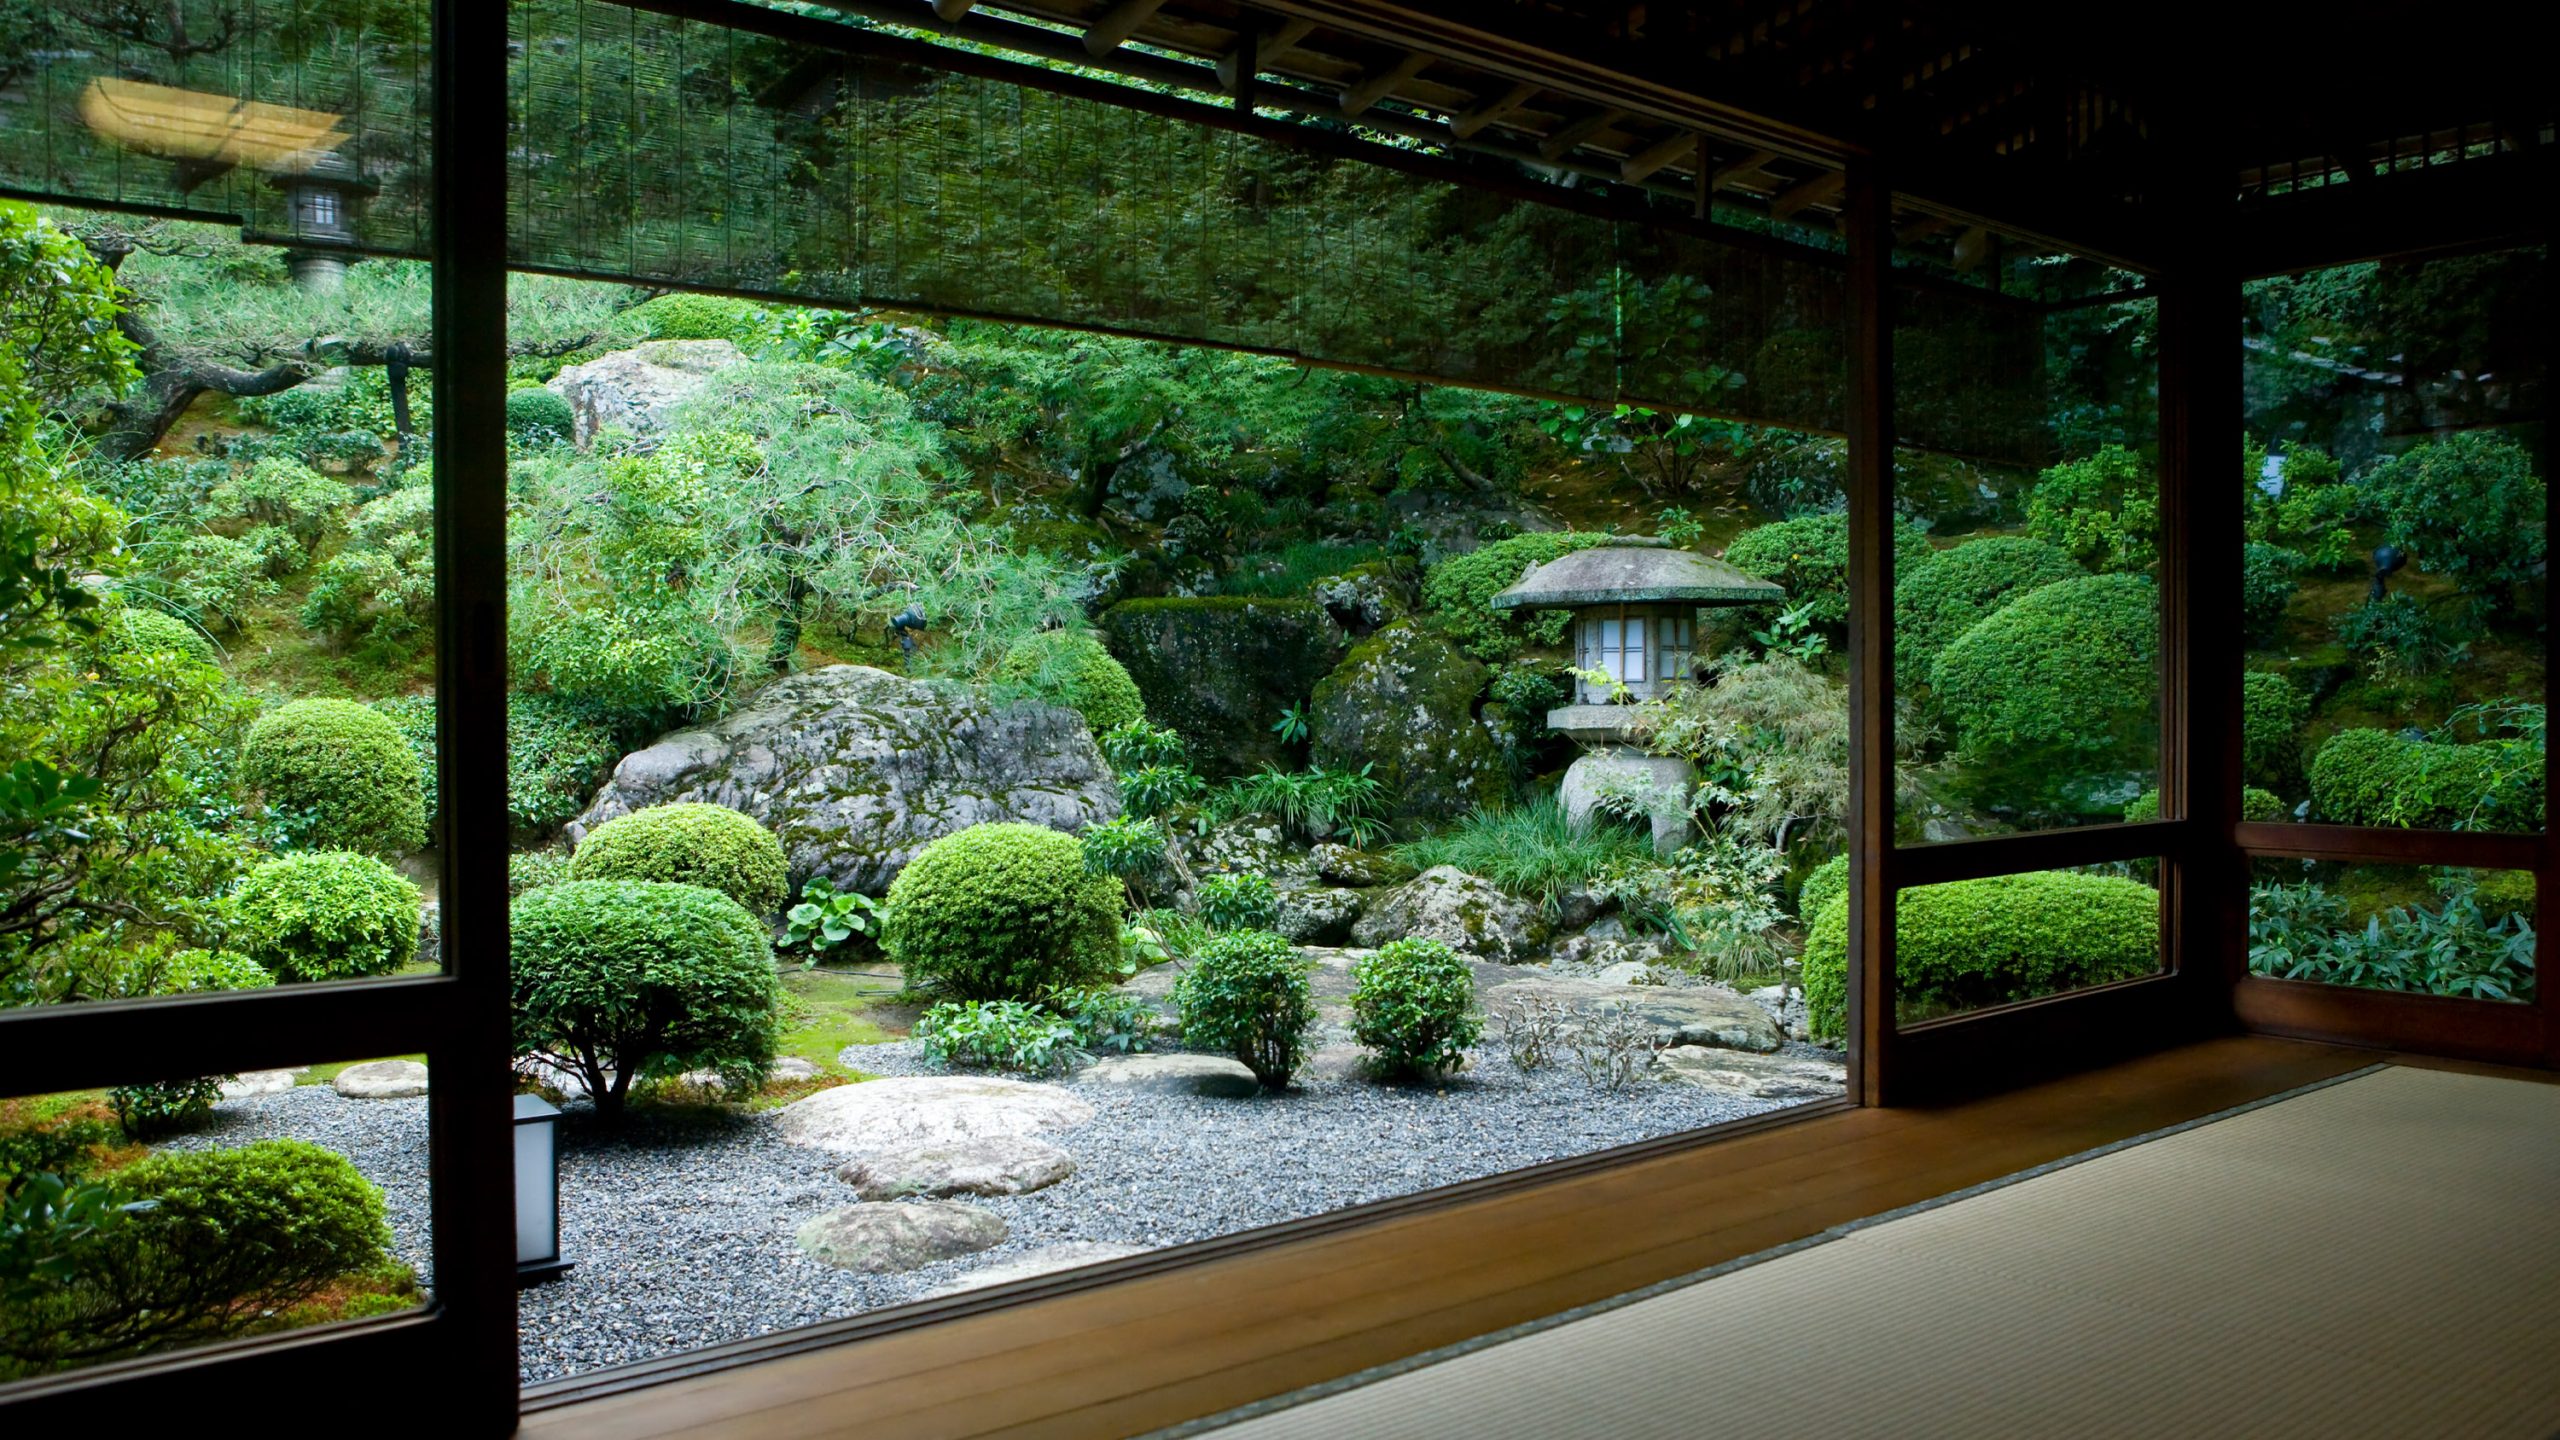 Japanese garden ideas